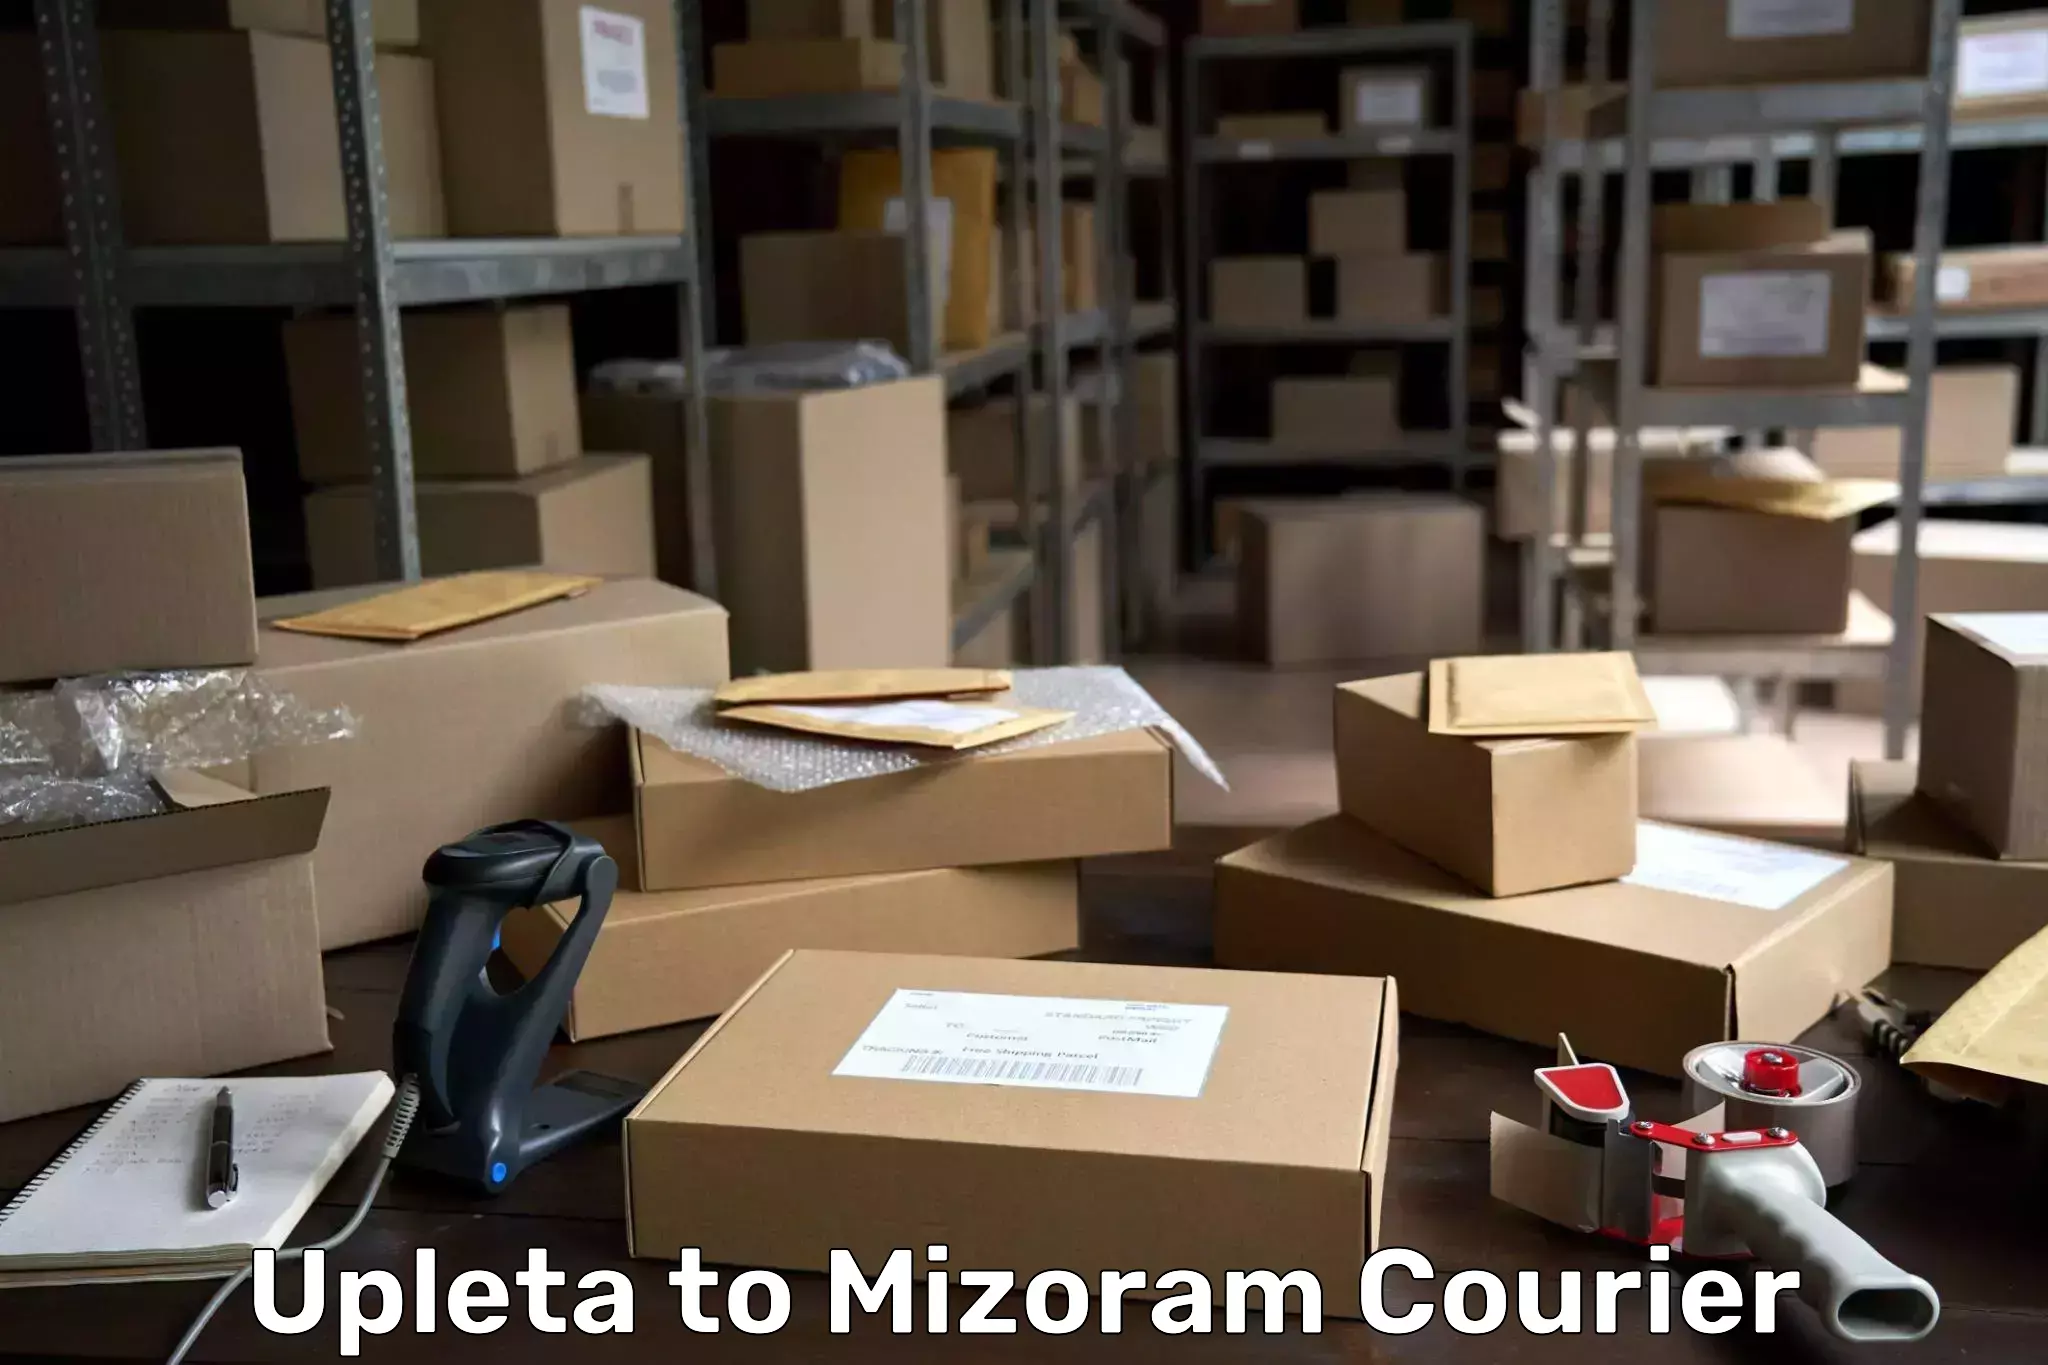 Doorstep delivery service Upleta to Mizoram